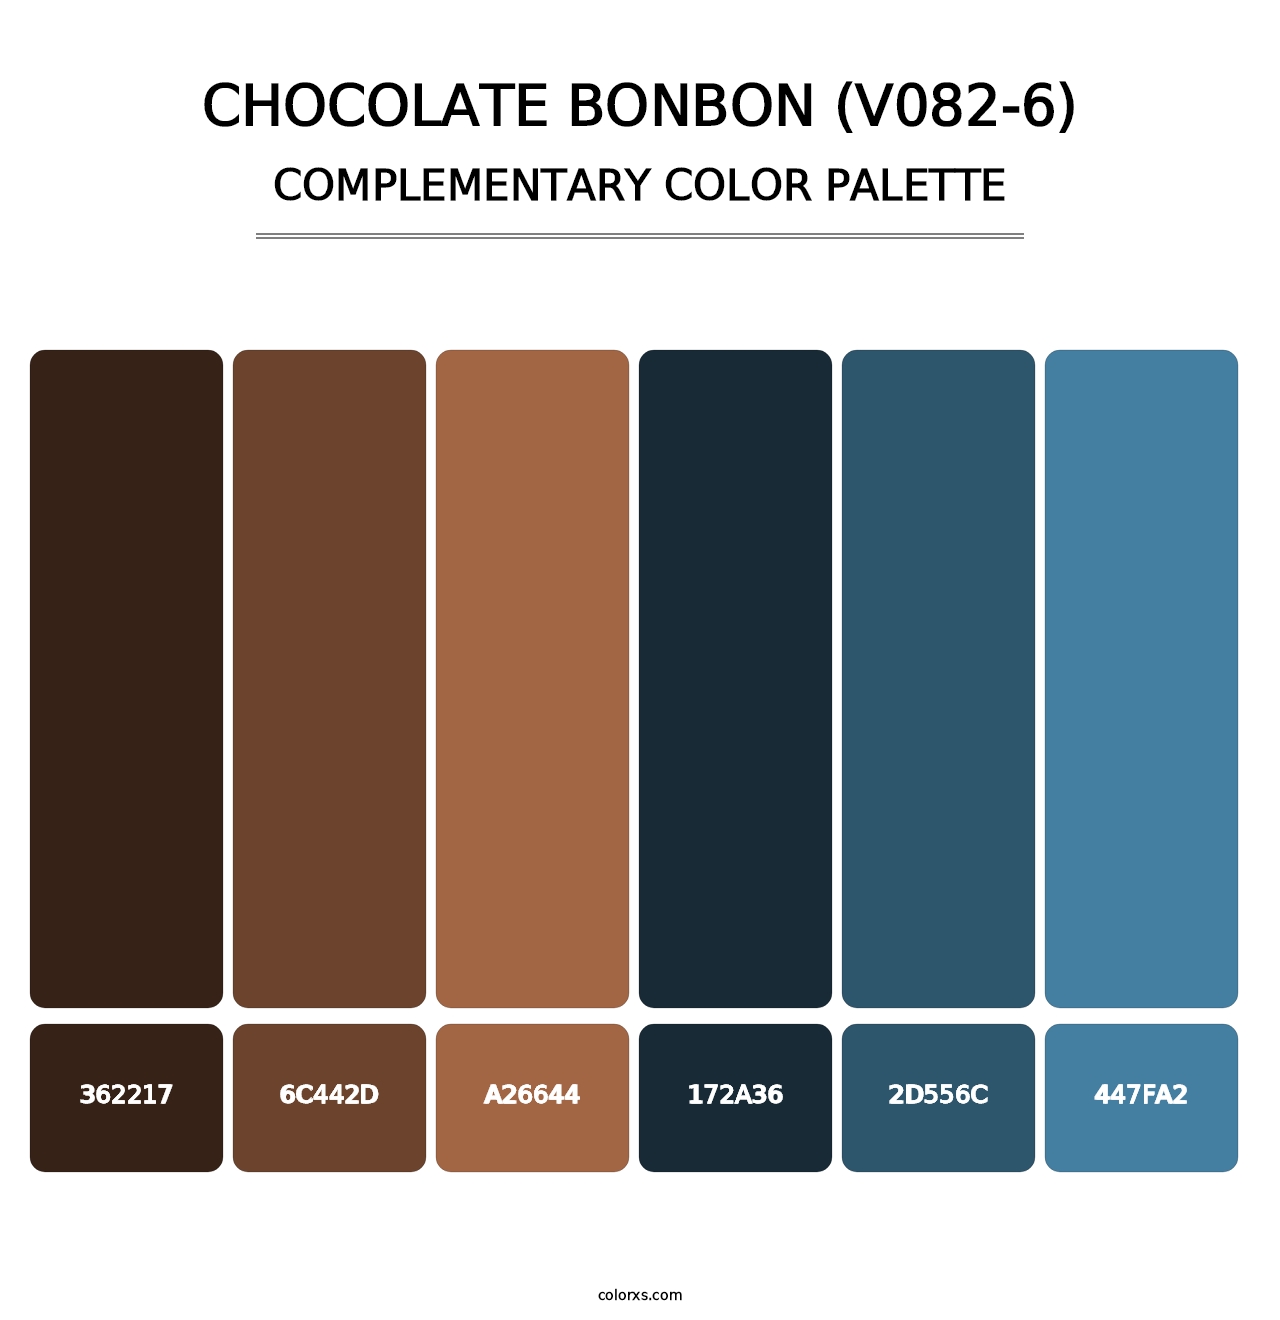 Chocolate Bonbon (V082-6) - Complementary Color Palette